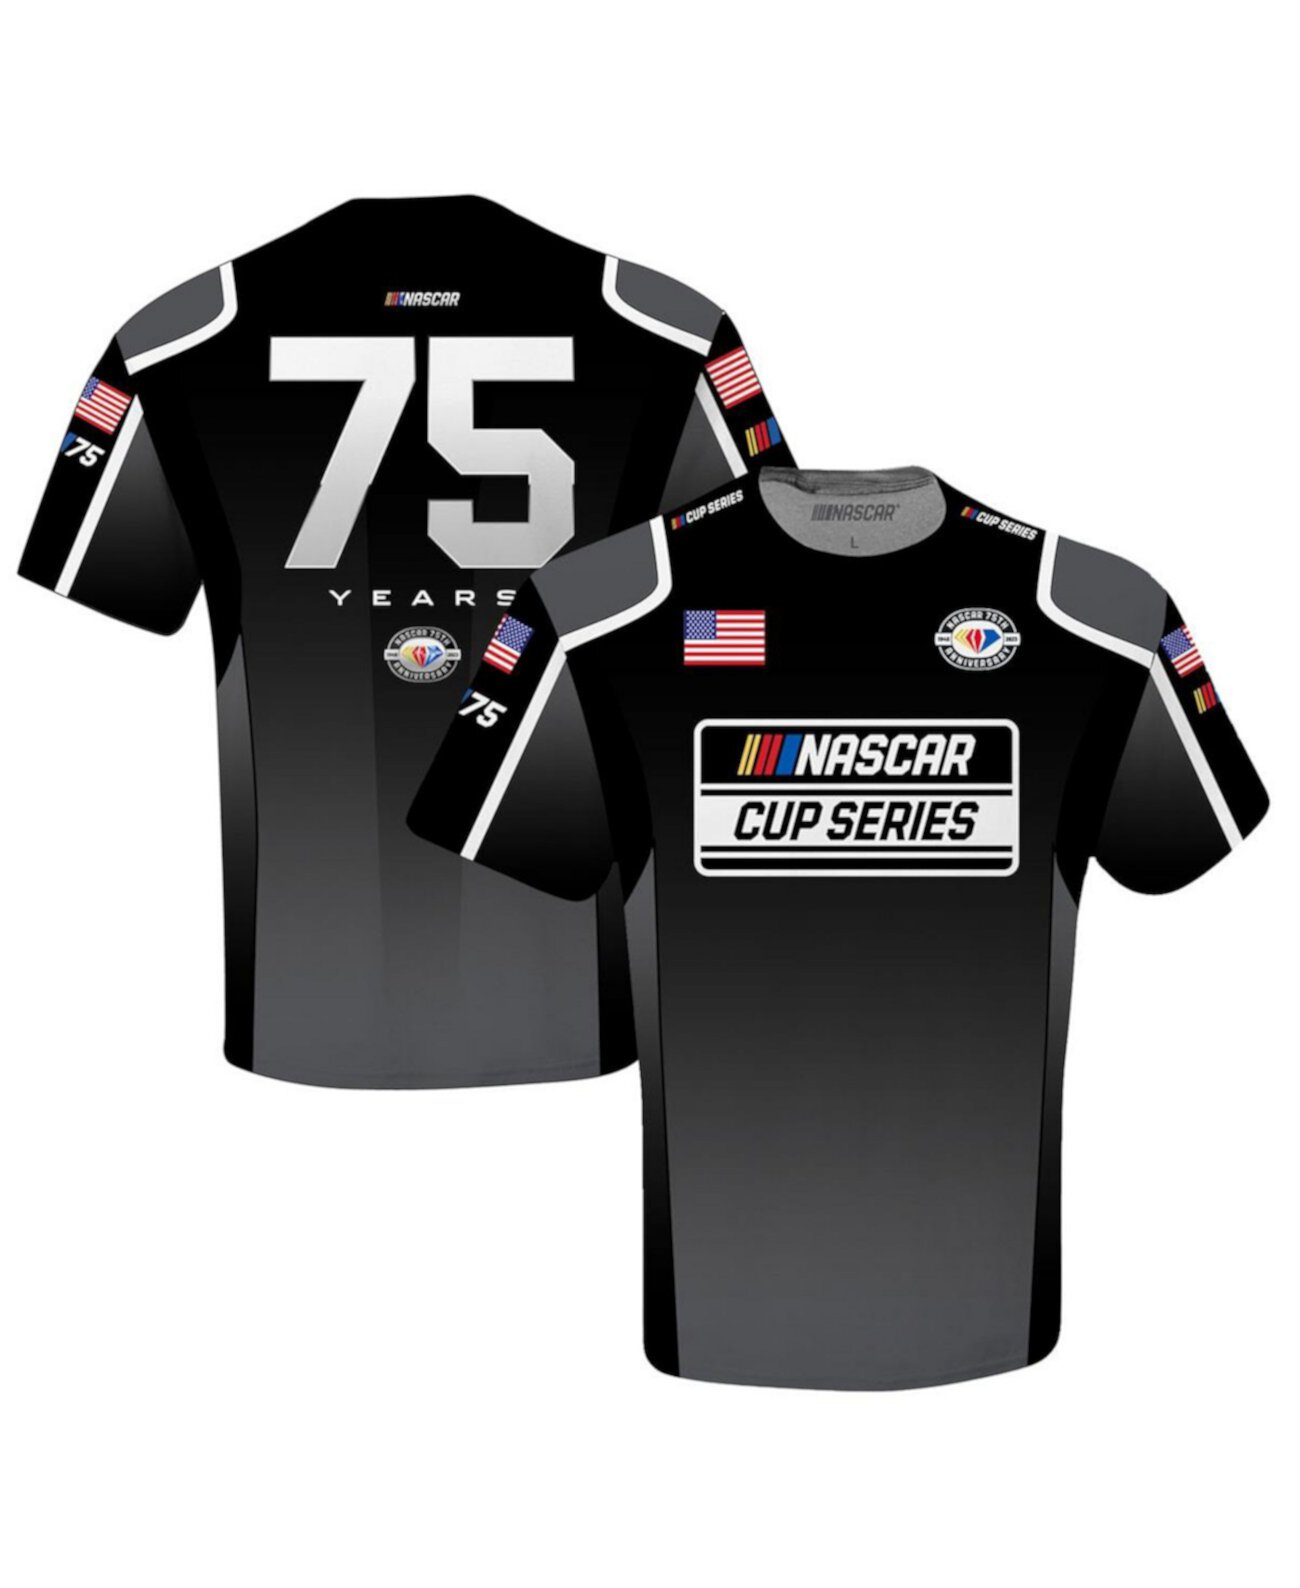 Мужская черная футболка с сублимированной формой NASCAR Merchandise Checkered Flag Sports